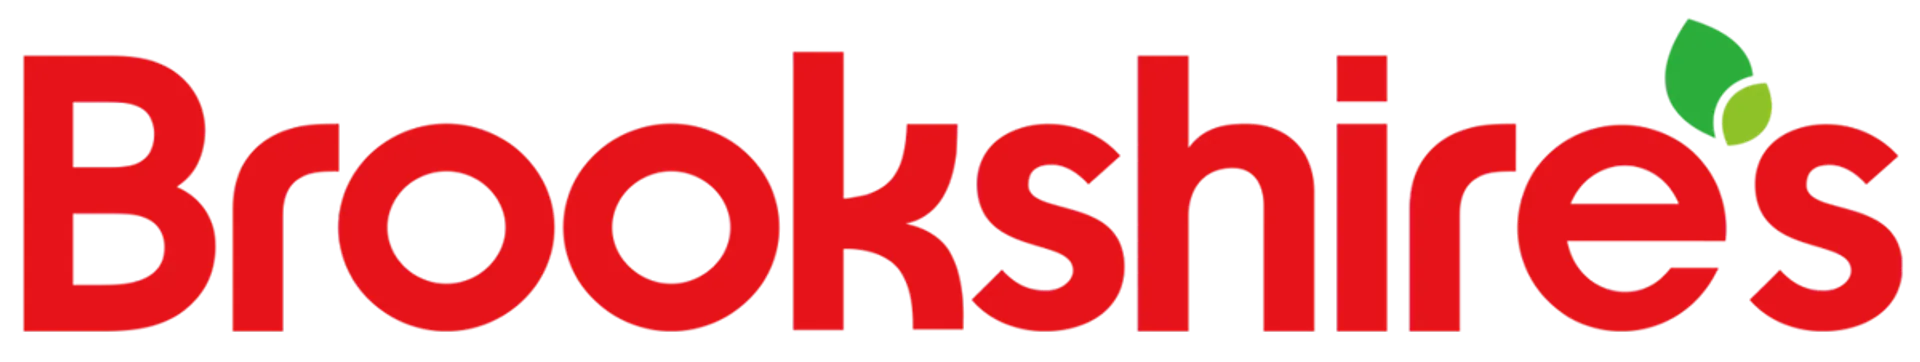 BROOKSHIRES logo